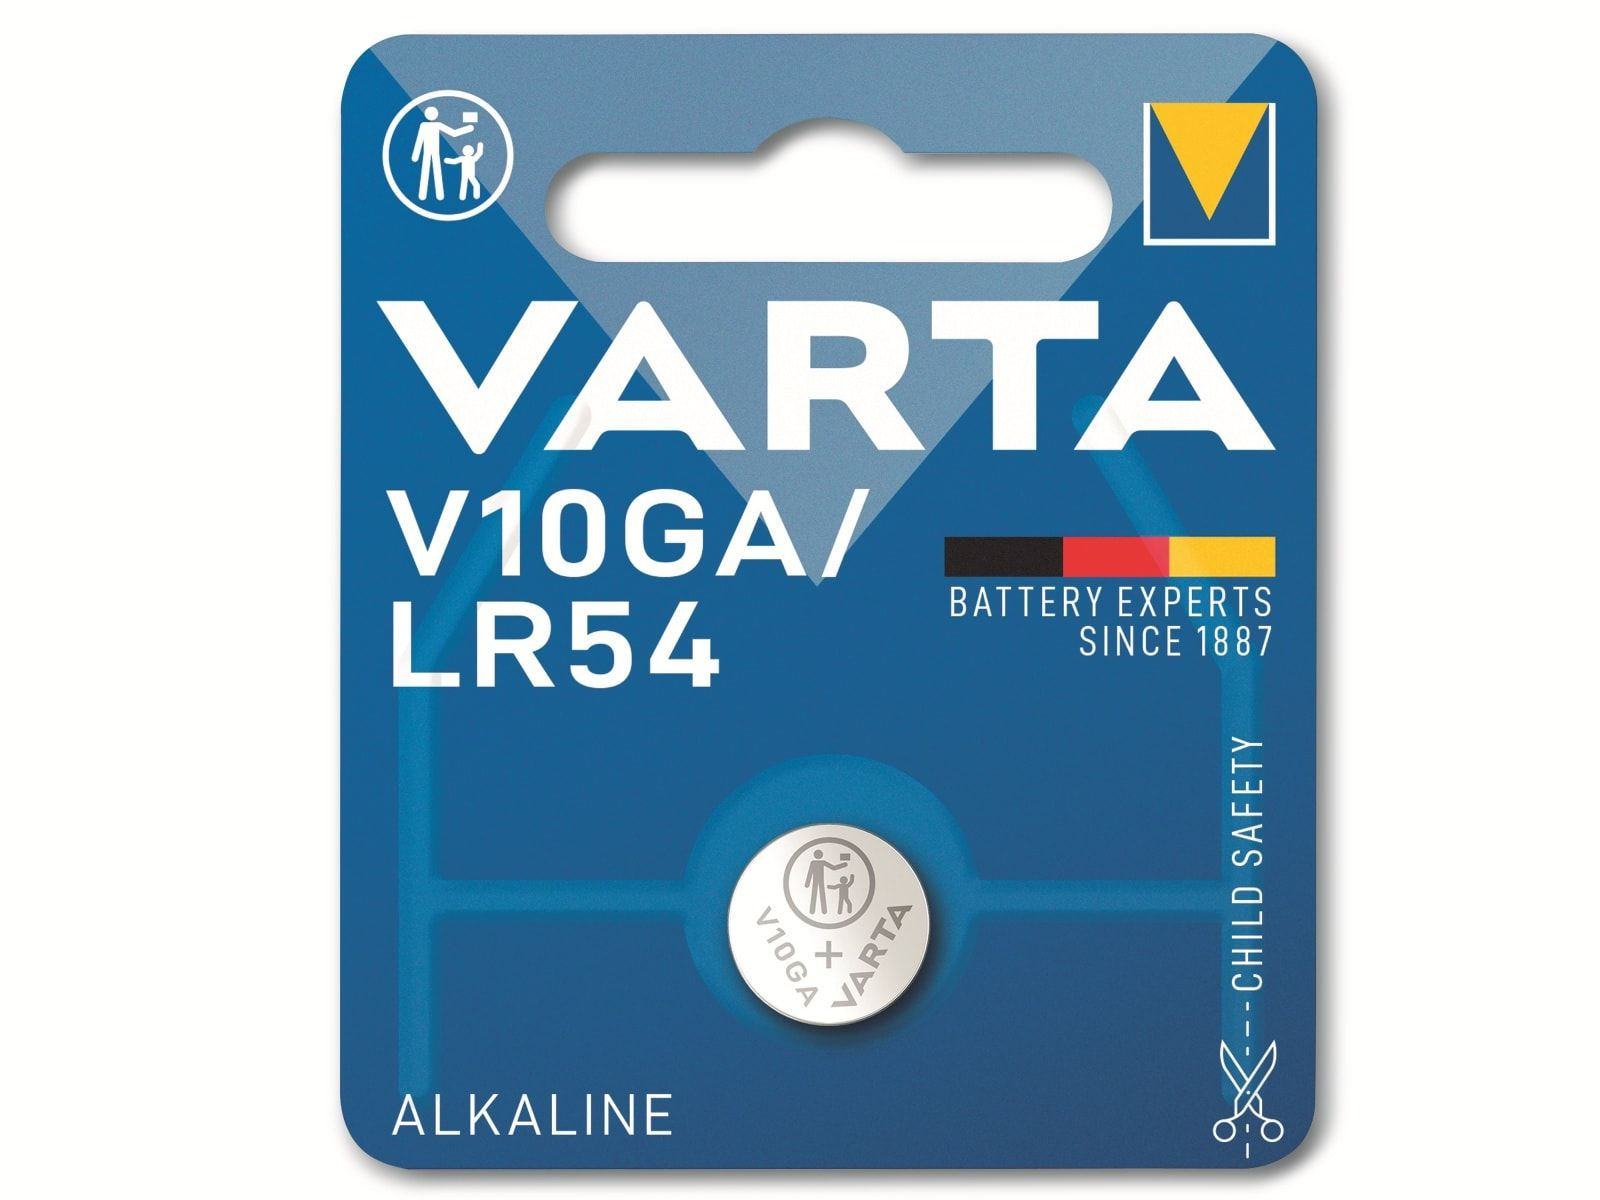 VARTA 1.5 0.05 Ah V10GA LR54 (1er Fotobatterie Fotobatterie, Blister) Electronics Mando Volt, Distancia AlMn, 1,5V